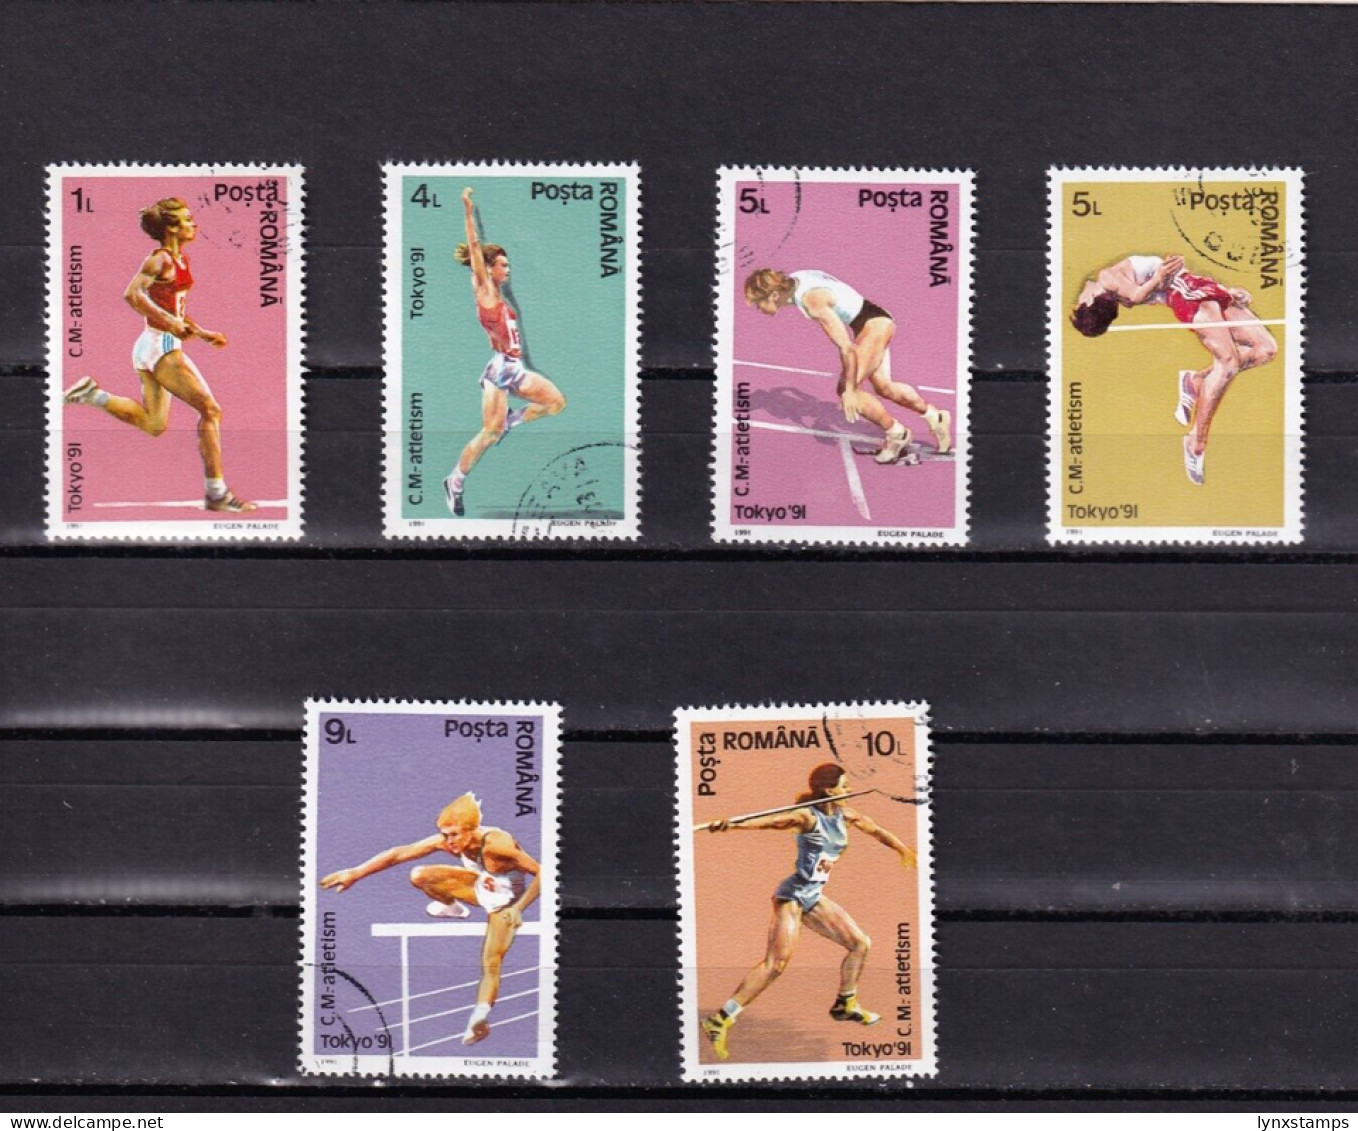 LI02 Romania 1991 World Athletics Championships, Tokyo Full Set Used Stamps - Used Stamps